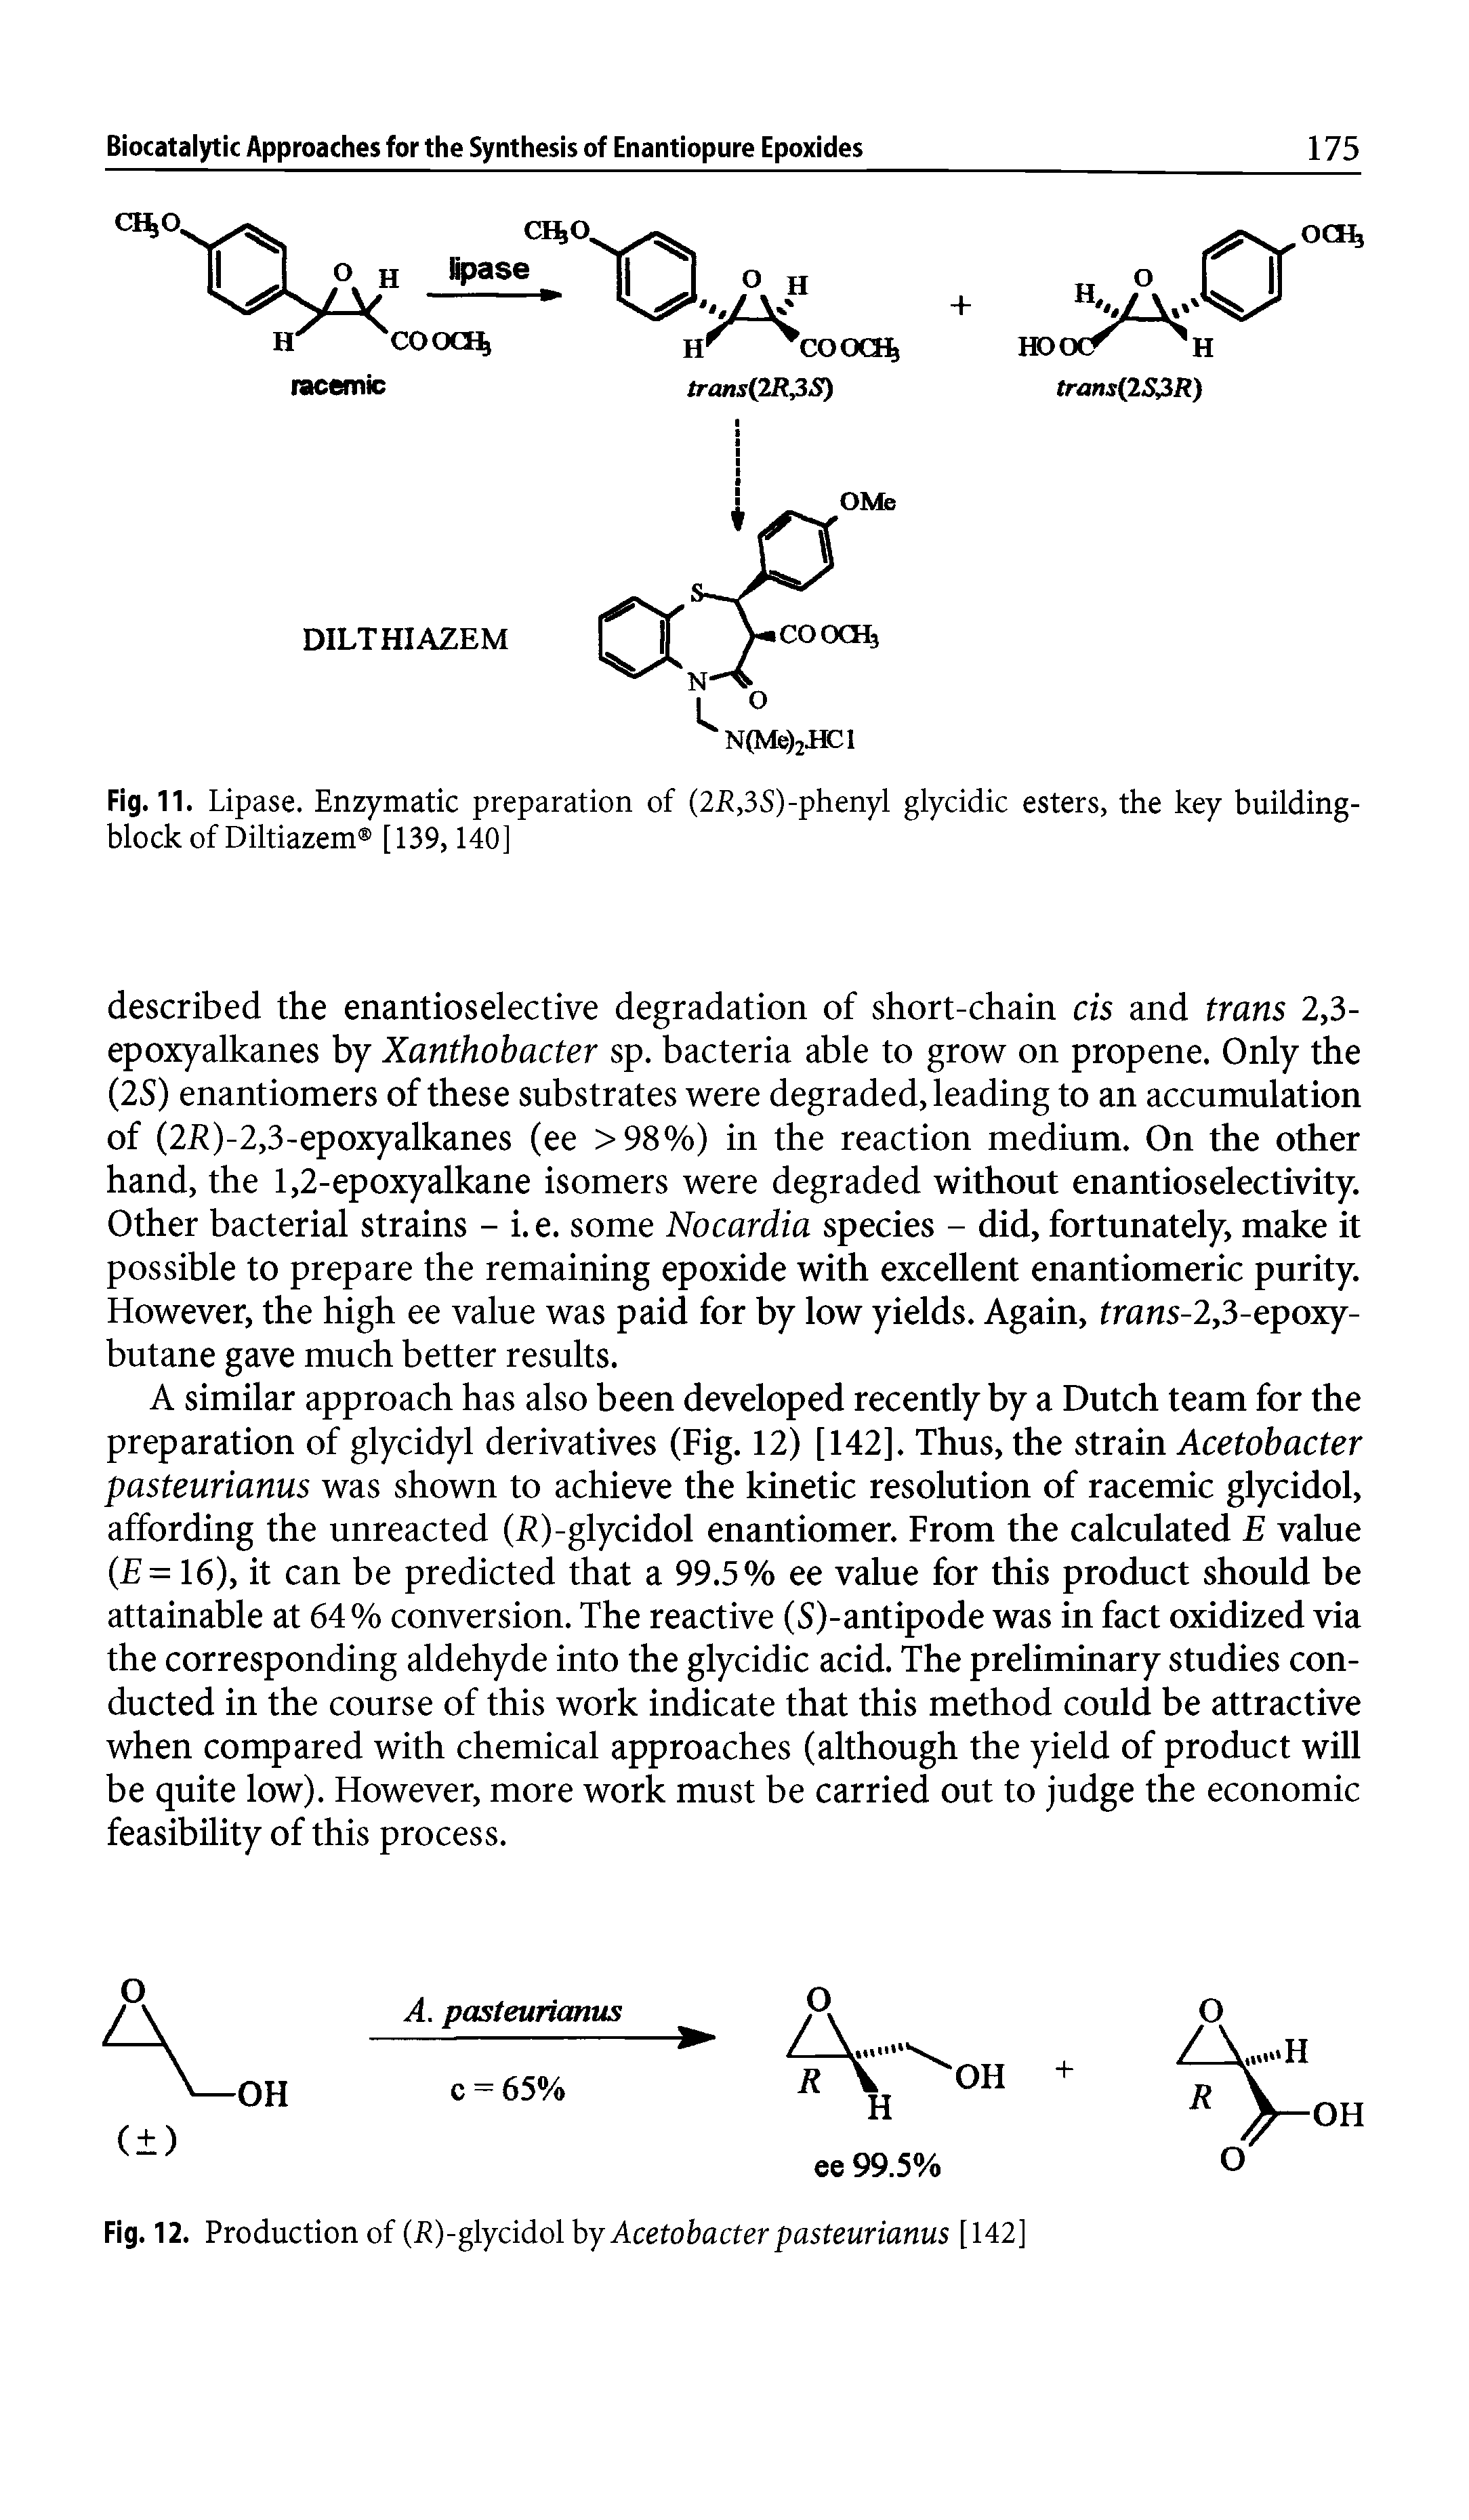 Fig. 11. Lipase. Enzymatic preparation of (27 ,3S)-phenyl glycidic esters, the key building-block of Diltiazem [139,140]...